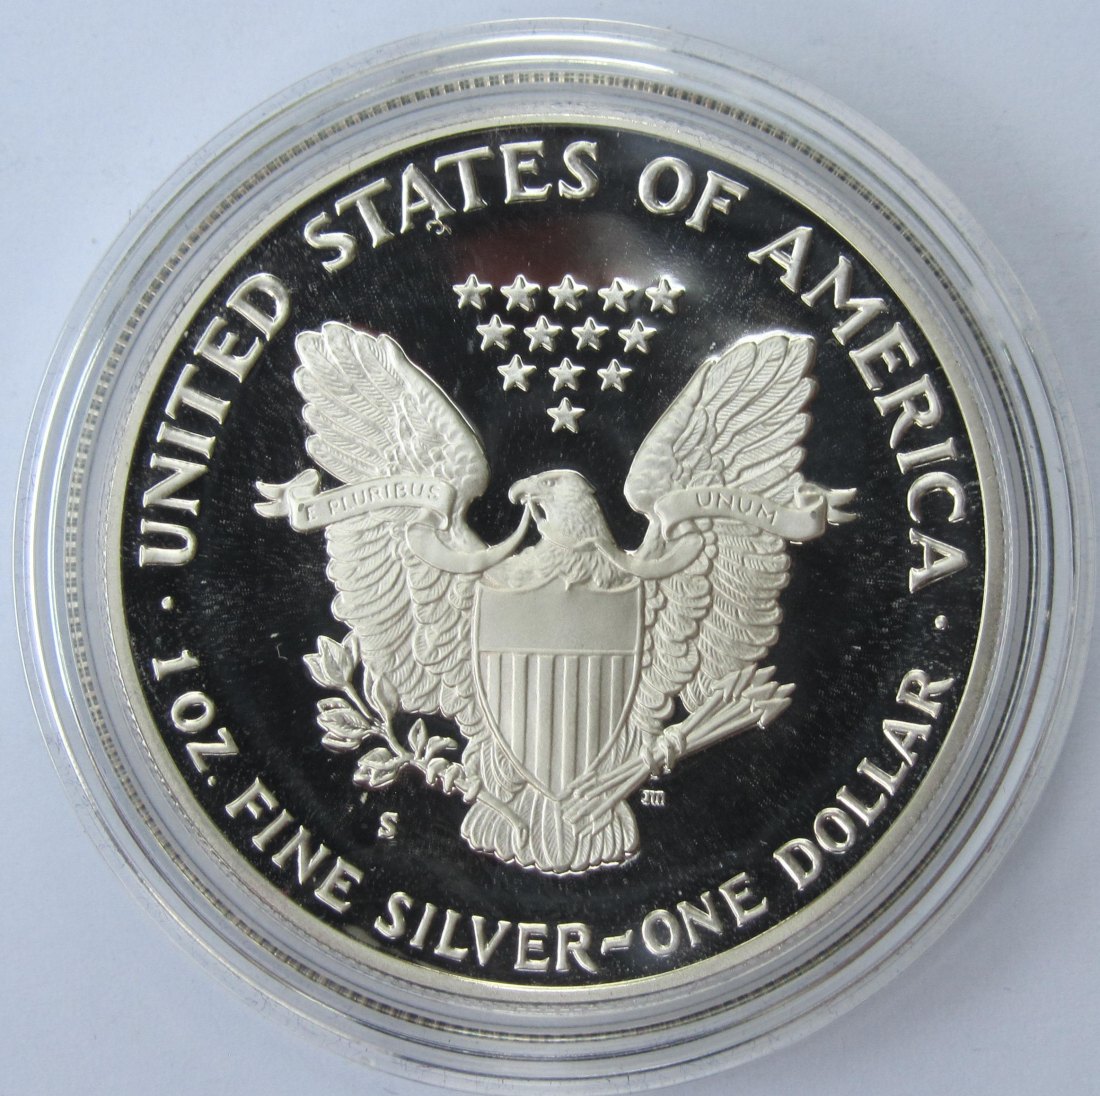  USA Vereinigte Staaten: Silberunze American Eagle 1990, PP/Proof   